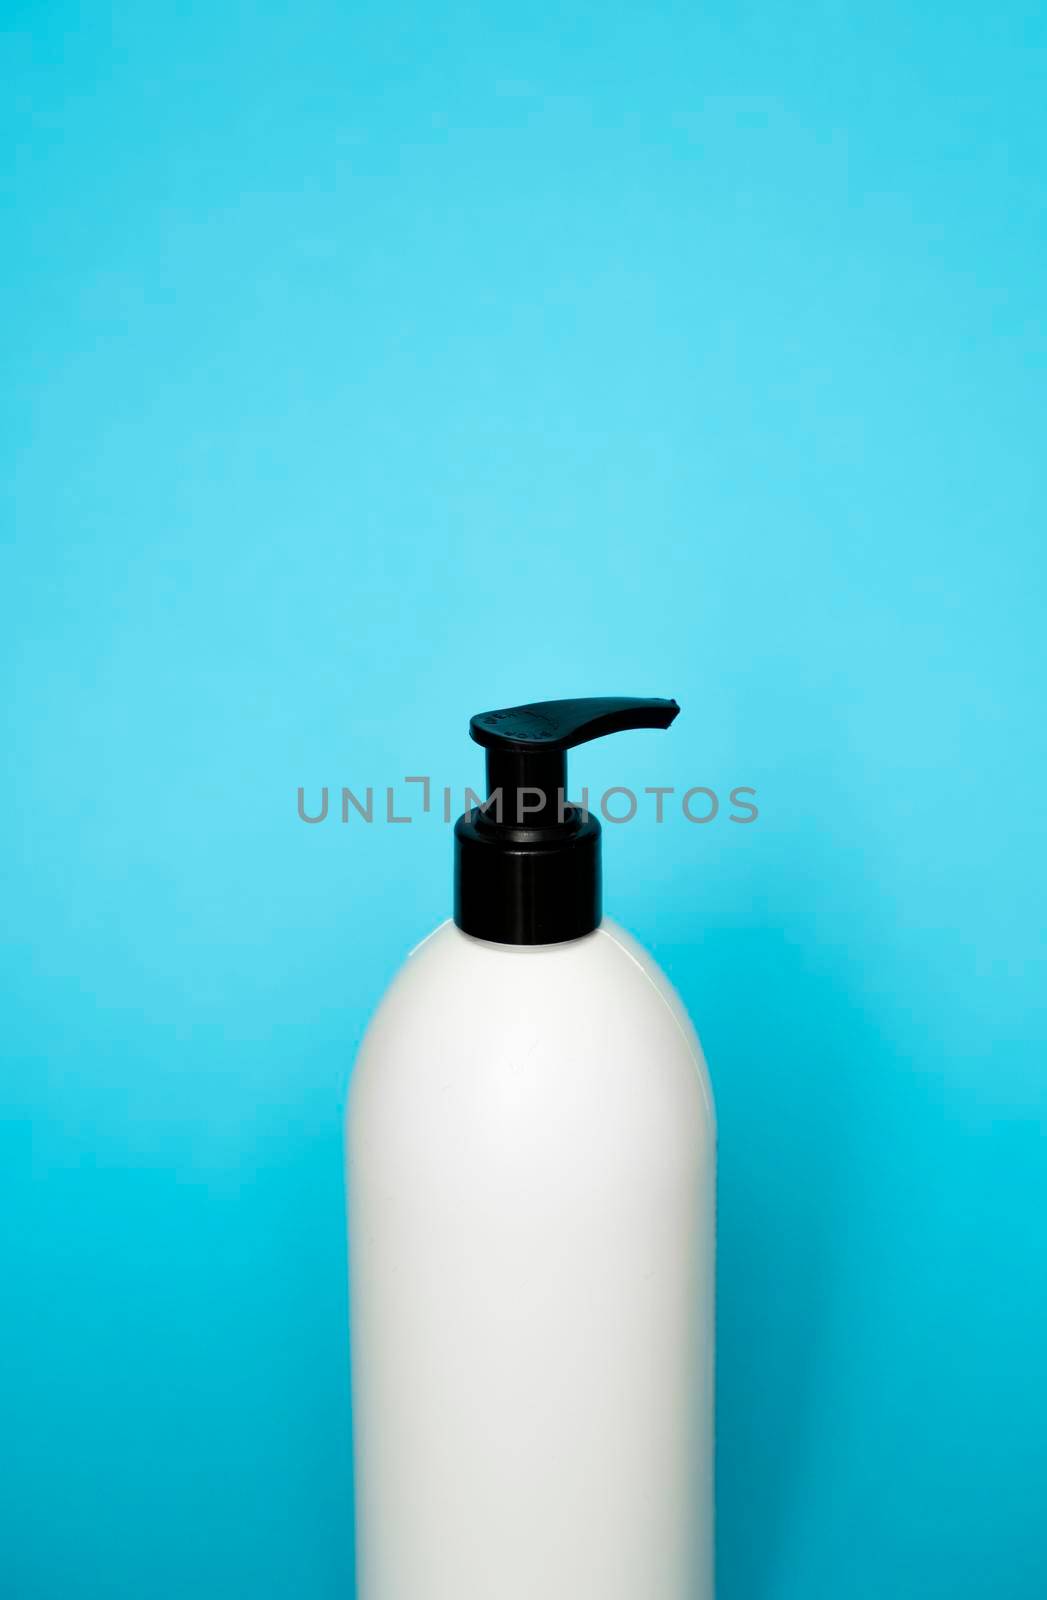 Plastic shampoo bottle on a blue background. Mock up template for design